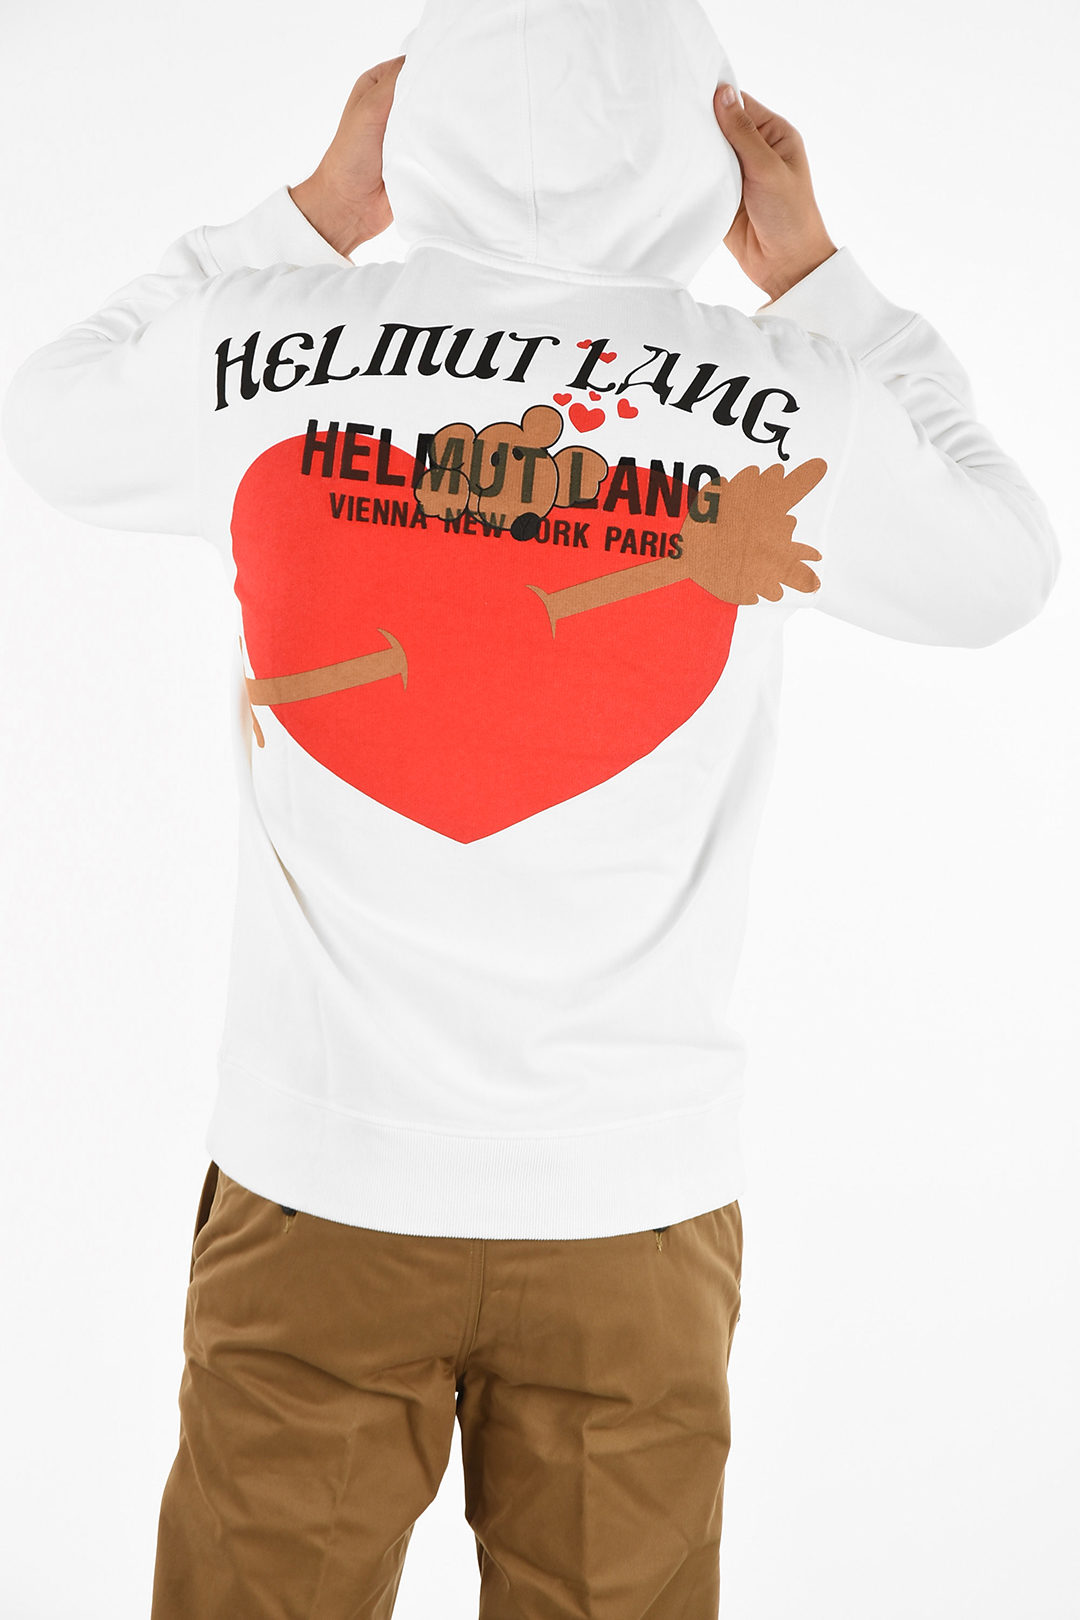 Informeer overschrijving gelei Helmut Lang hoodie sweatshirt men - Glamood Outlet